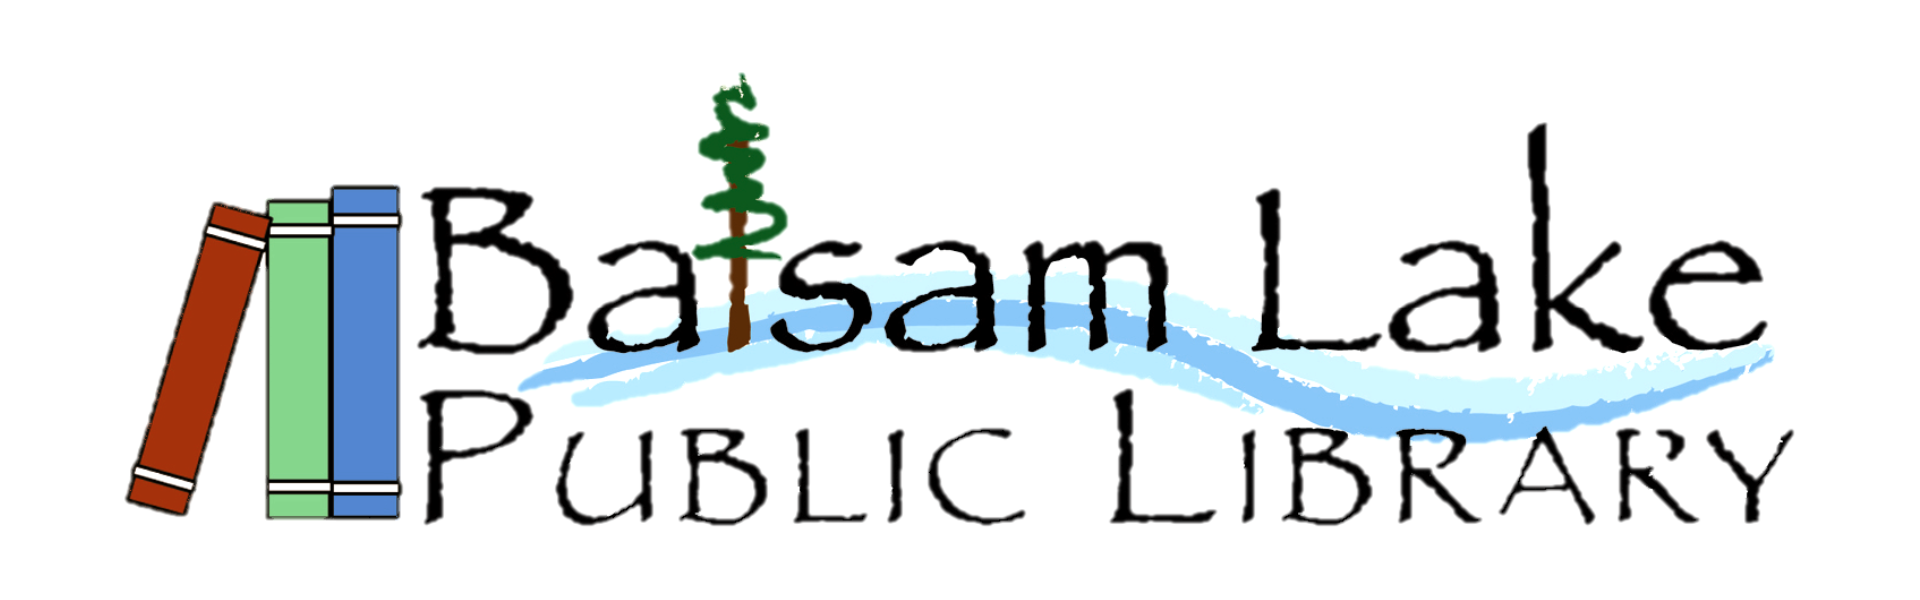 Balsam Lake Public Library